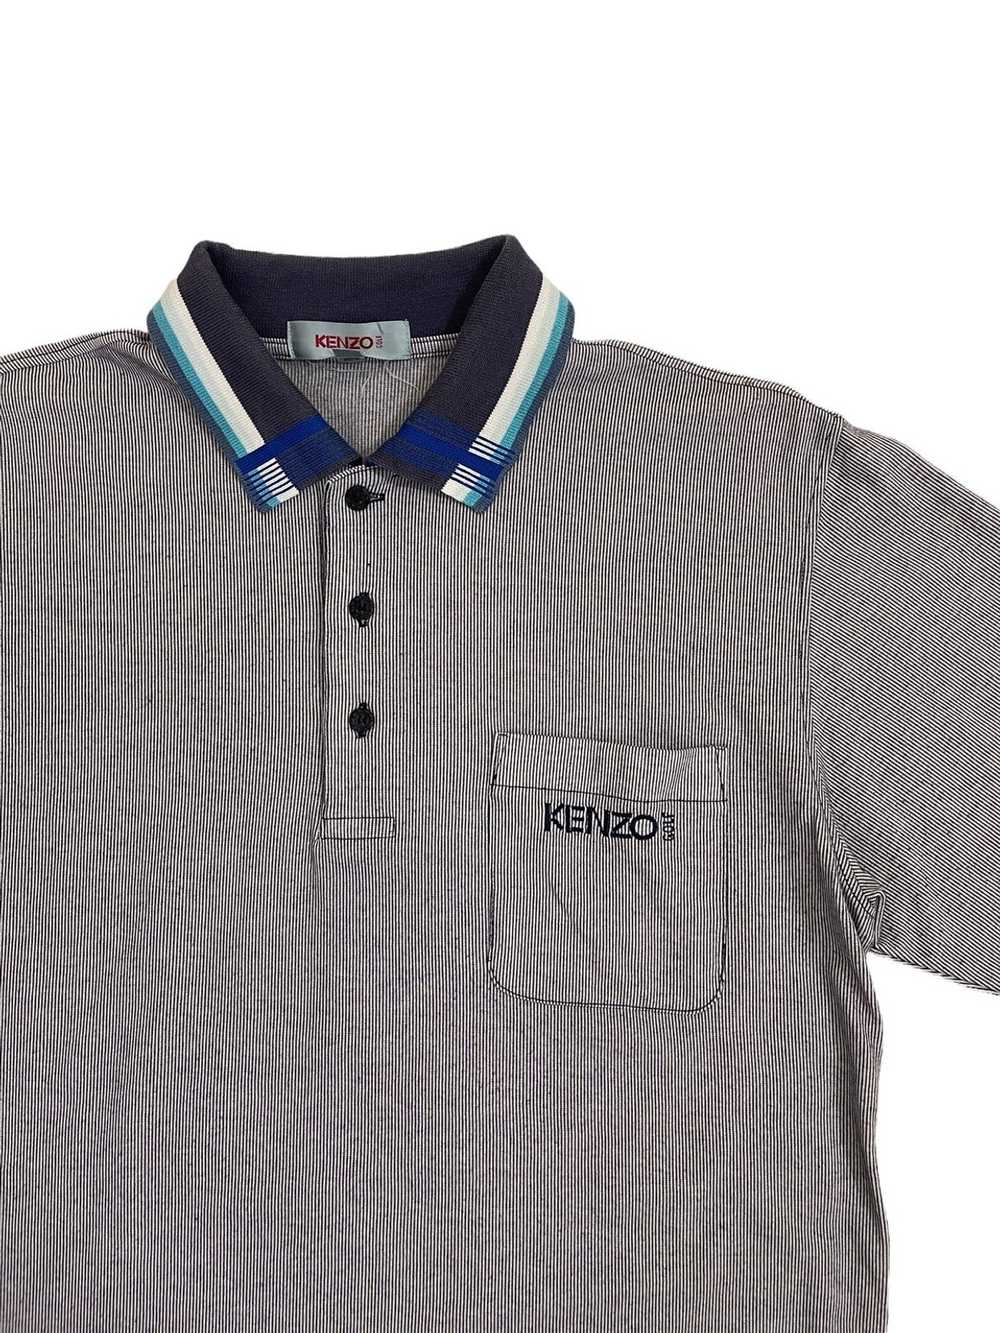 Kenzo × Vintage Vintage Kenzo Golf Polo shirt - image 4